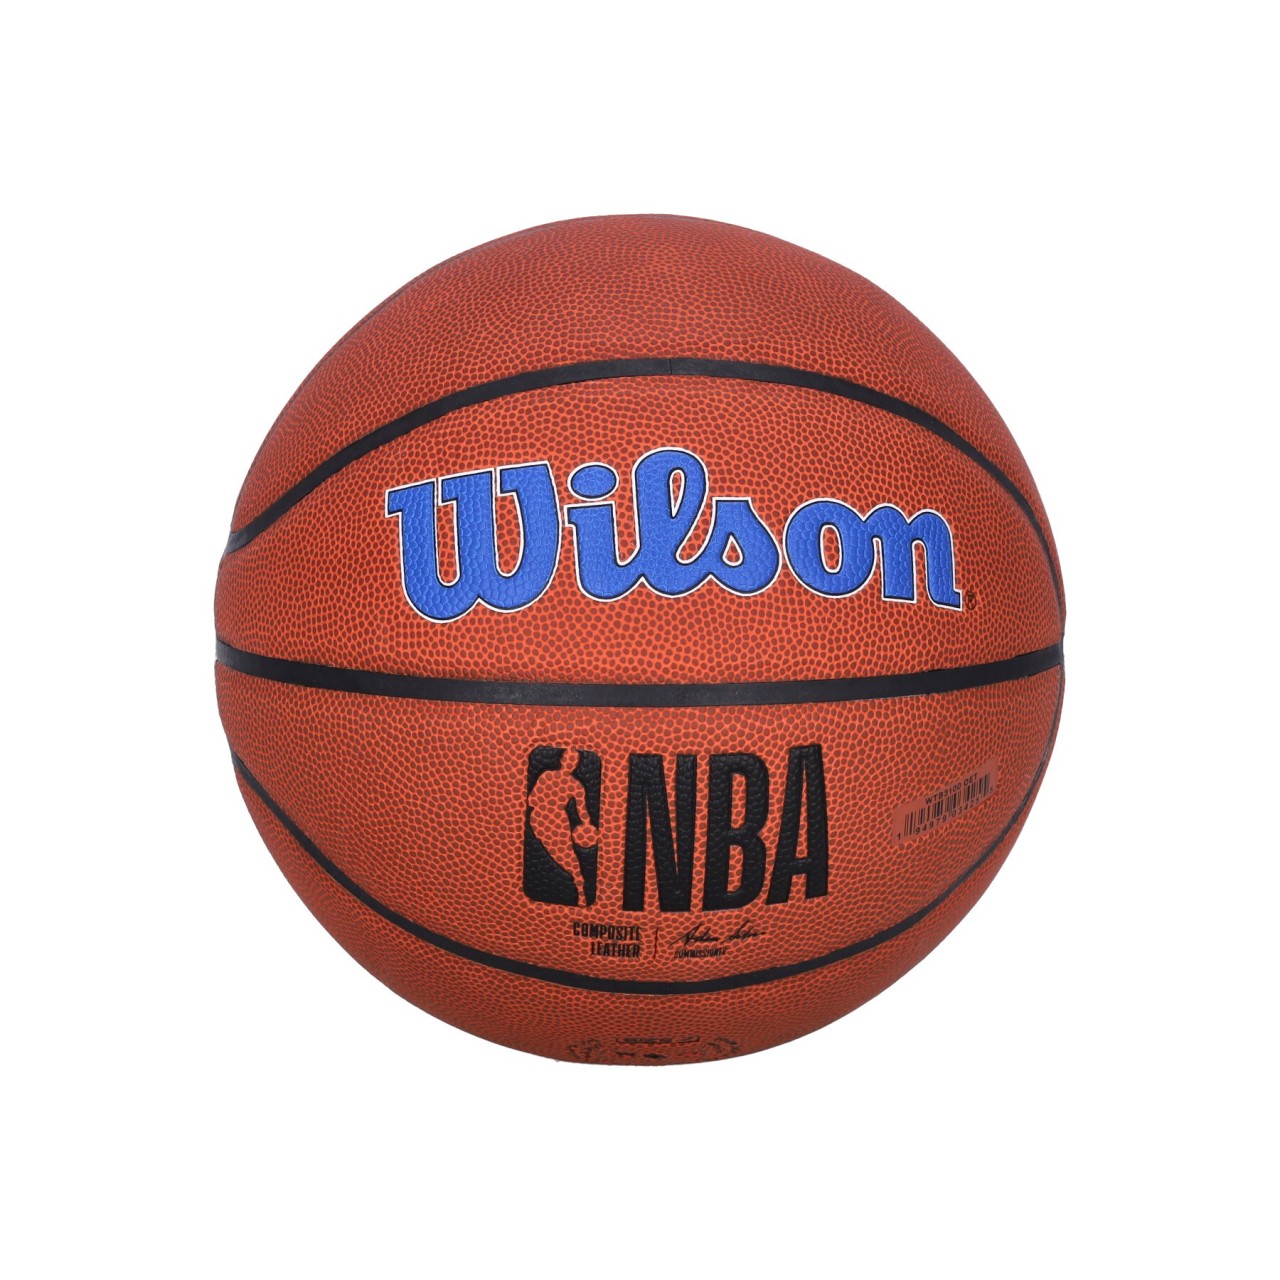 WILSON TEAM NBA TEAM ALLIANCE BASKETBALL SIZE 7 DETPIS WTB3100XBDET